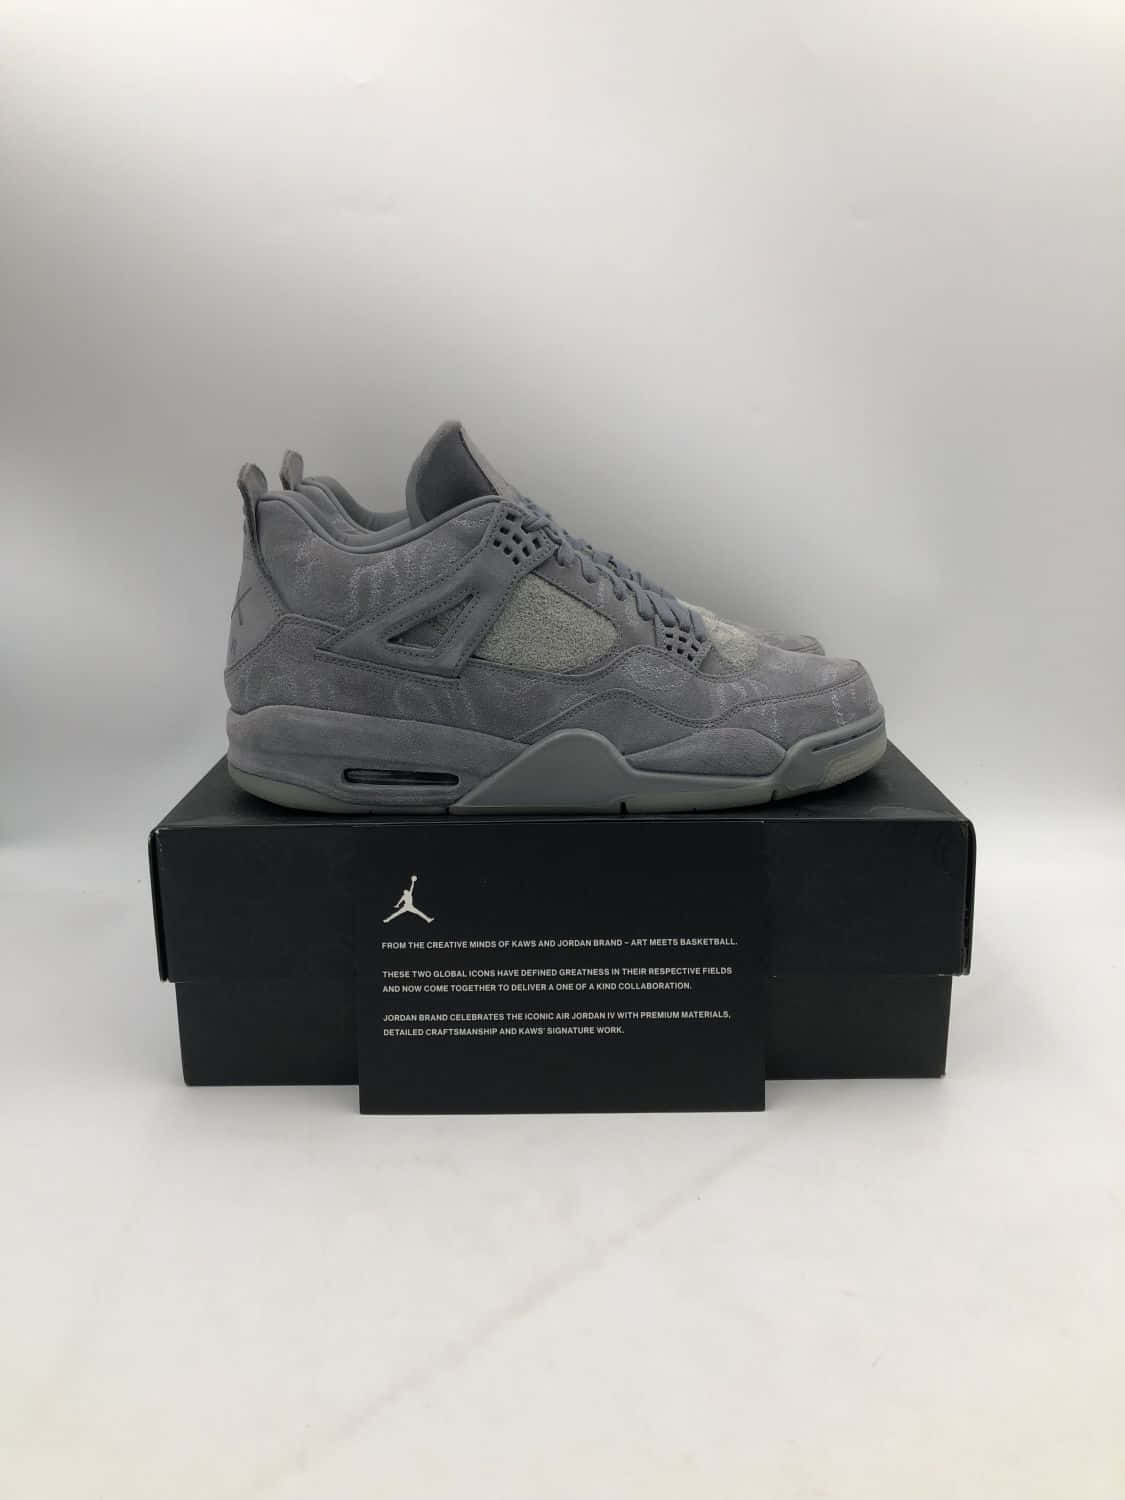 Caption: Verified Nike Air Jordan 4 In Classic Gray Wallpaper